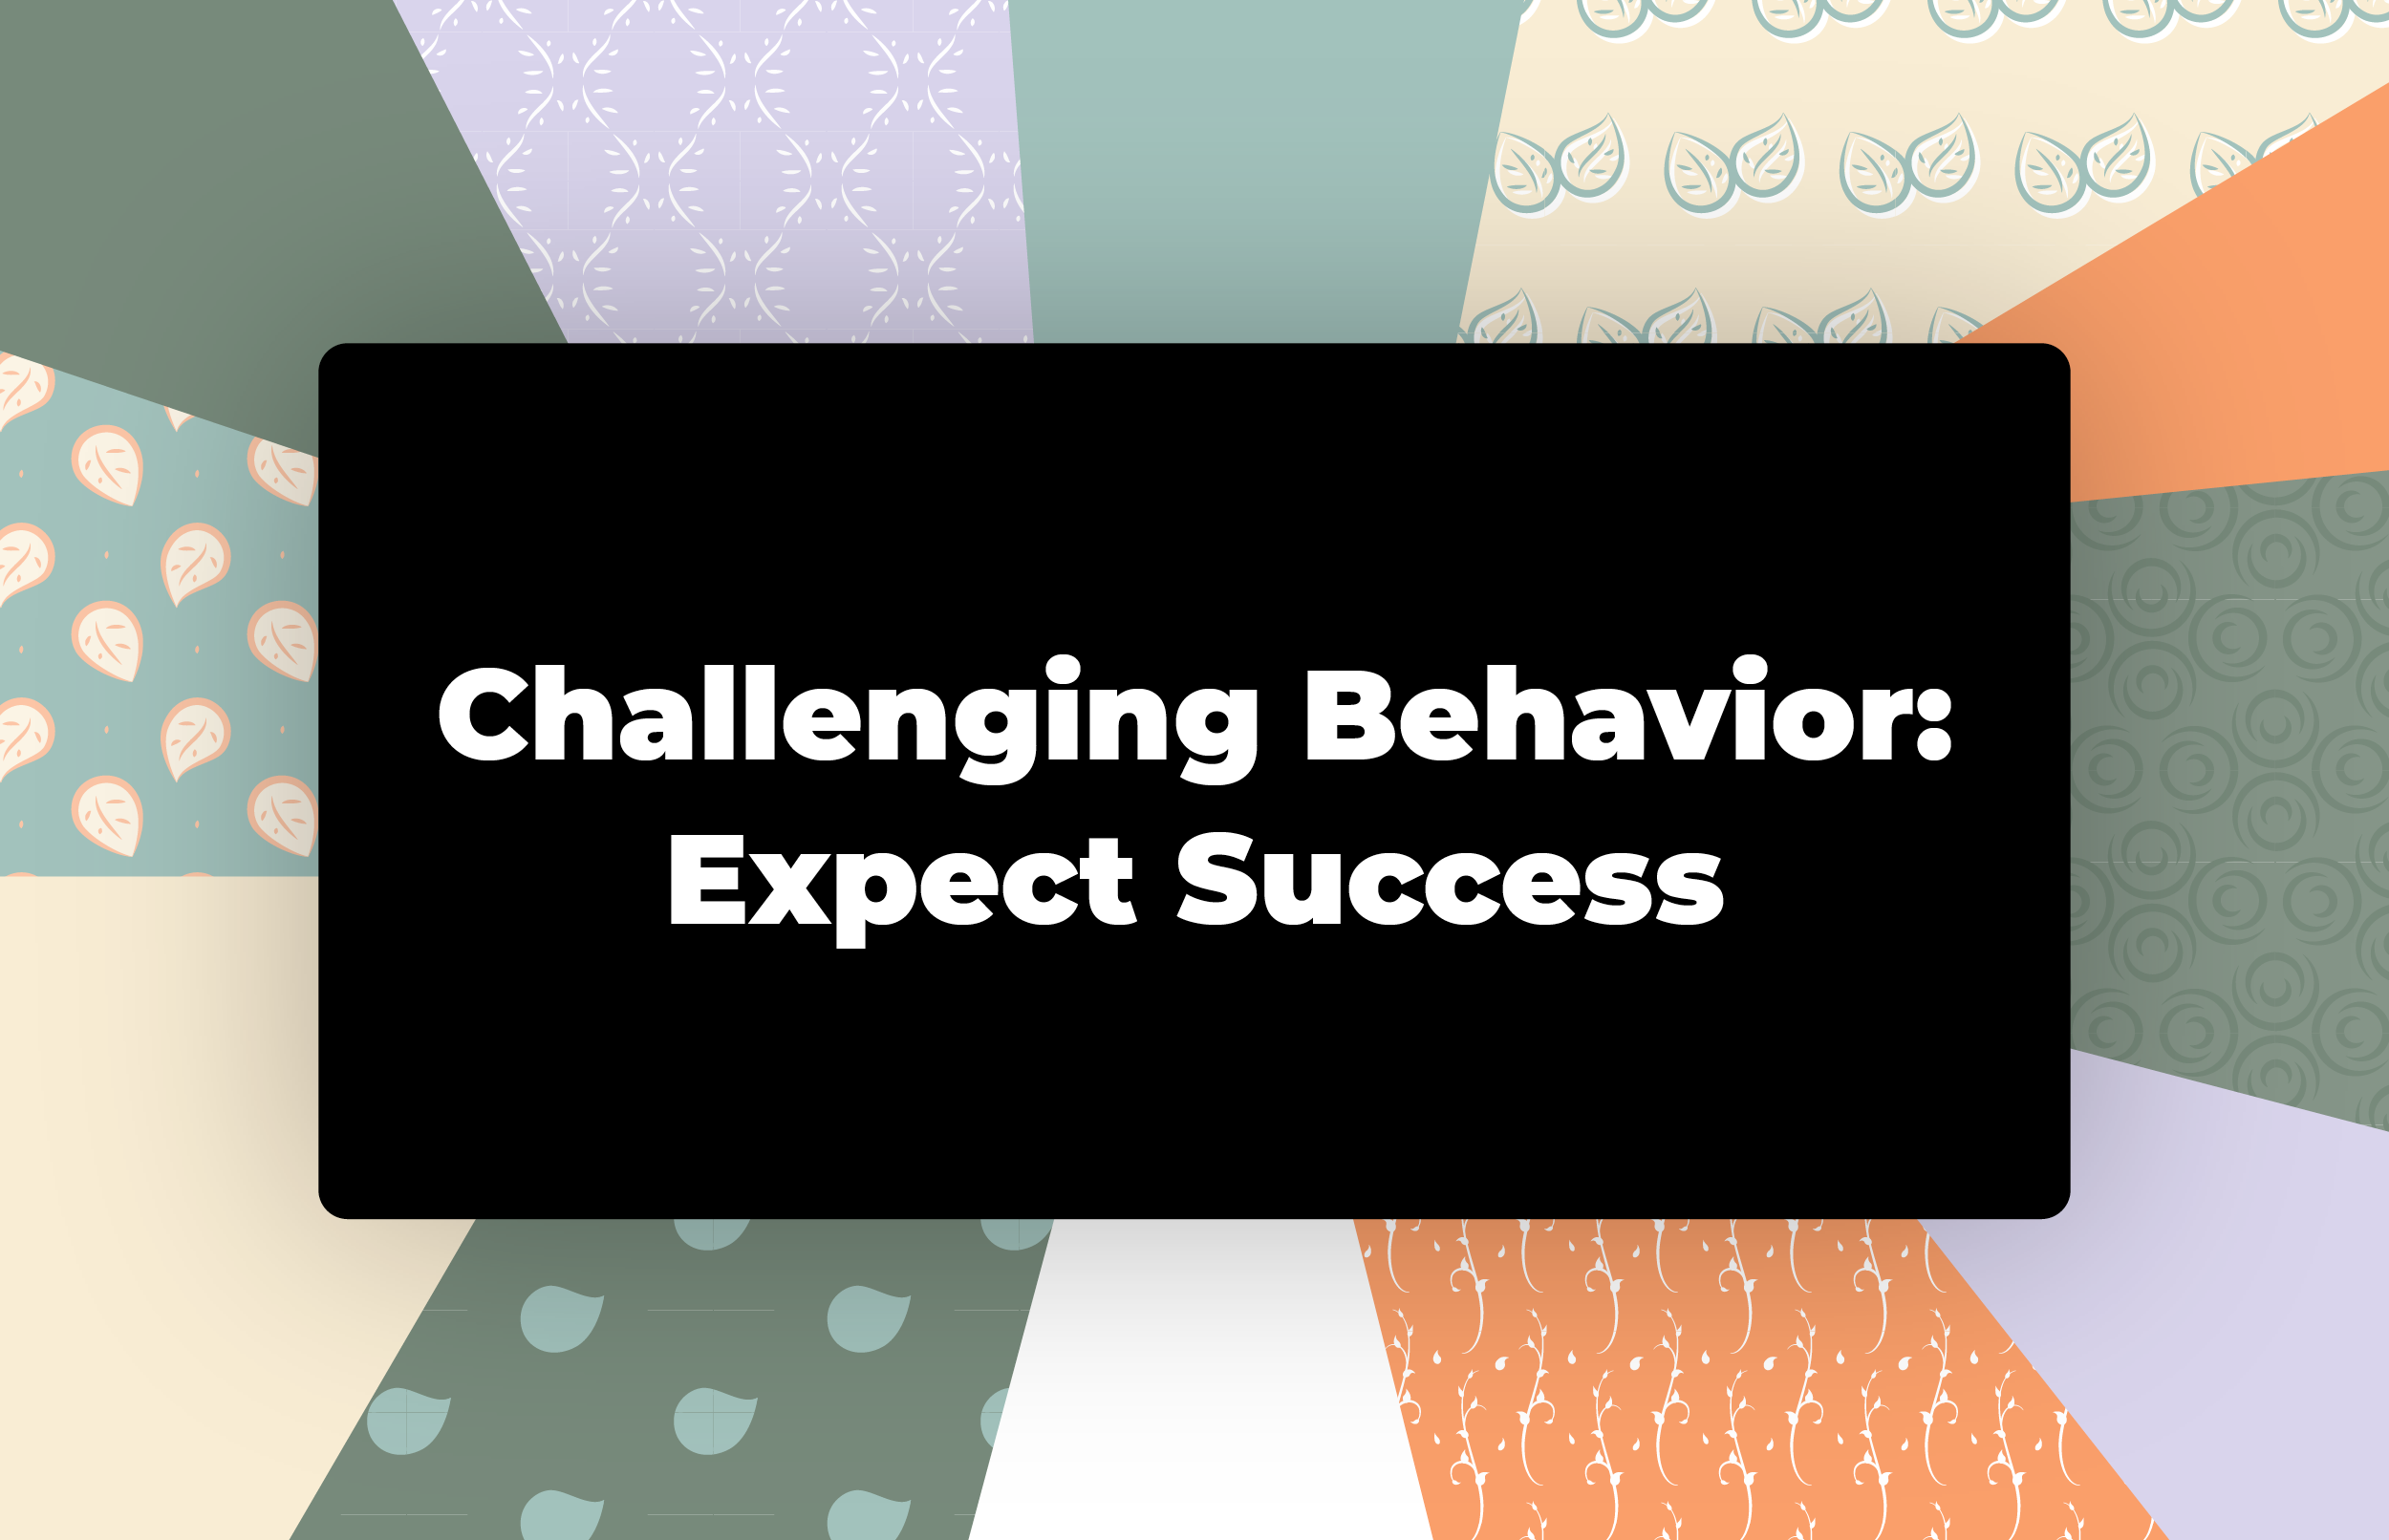 Challenging Behavior Project Image: Challenging Behavior: Expect Success Documents